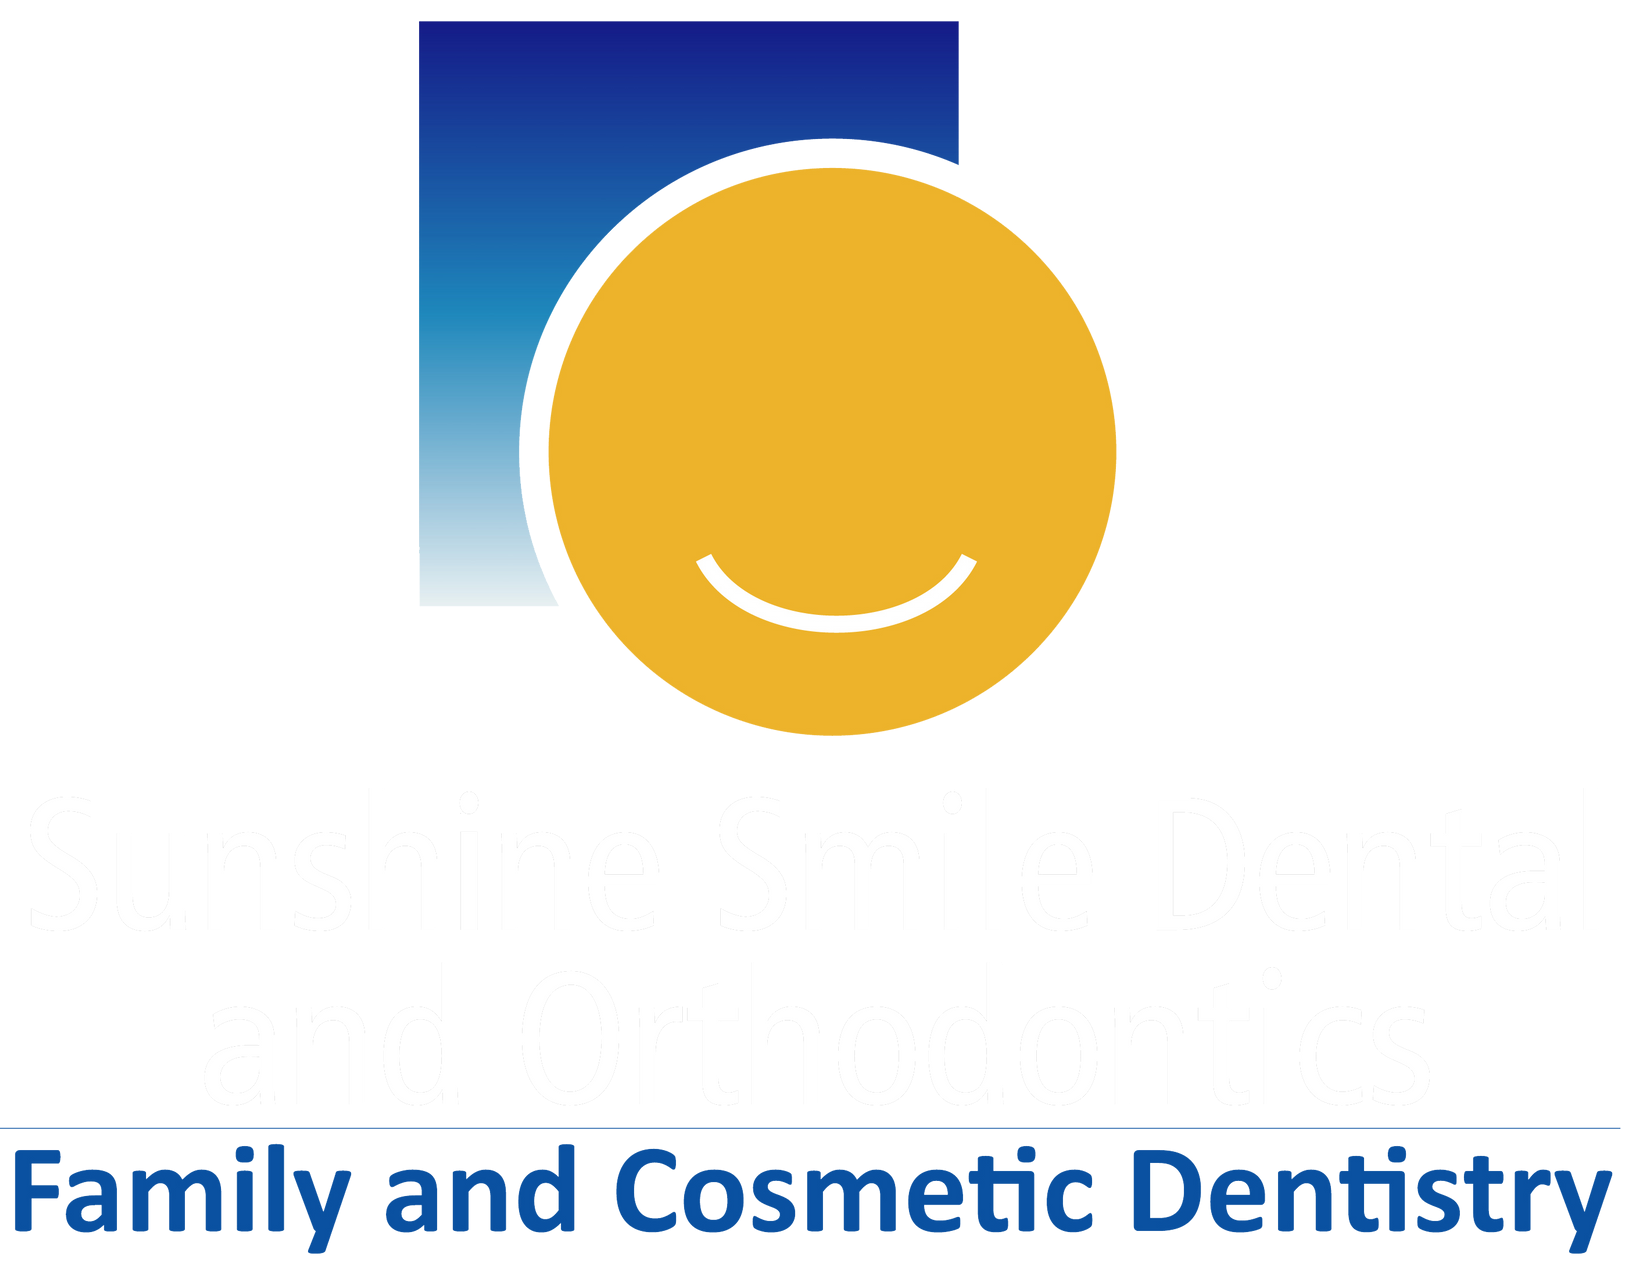 Sunshine Smile Dental and Orthodontics in San Dimas, CA